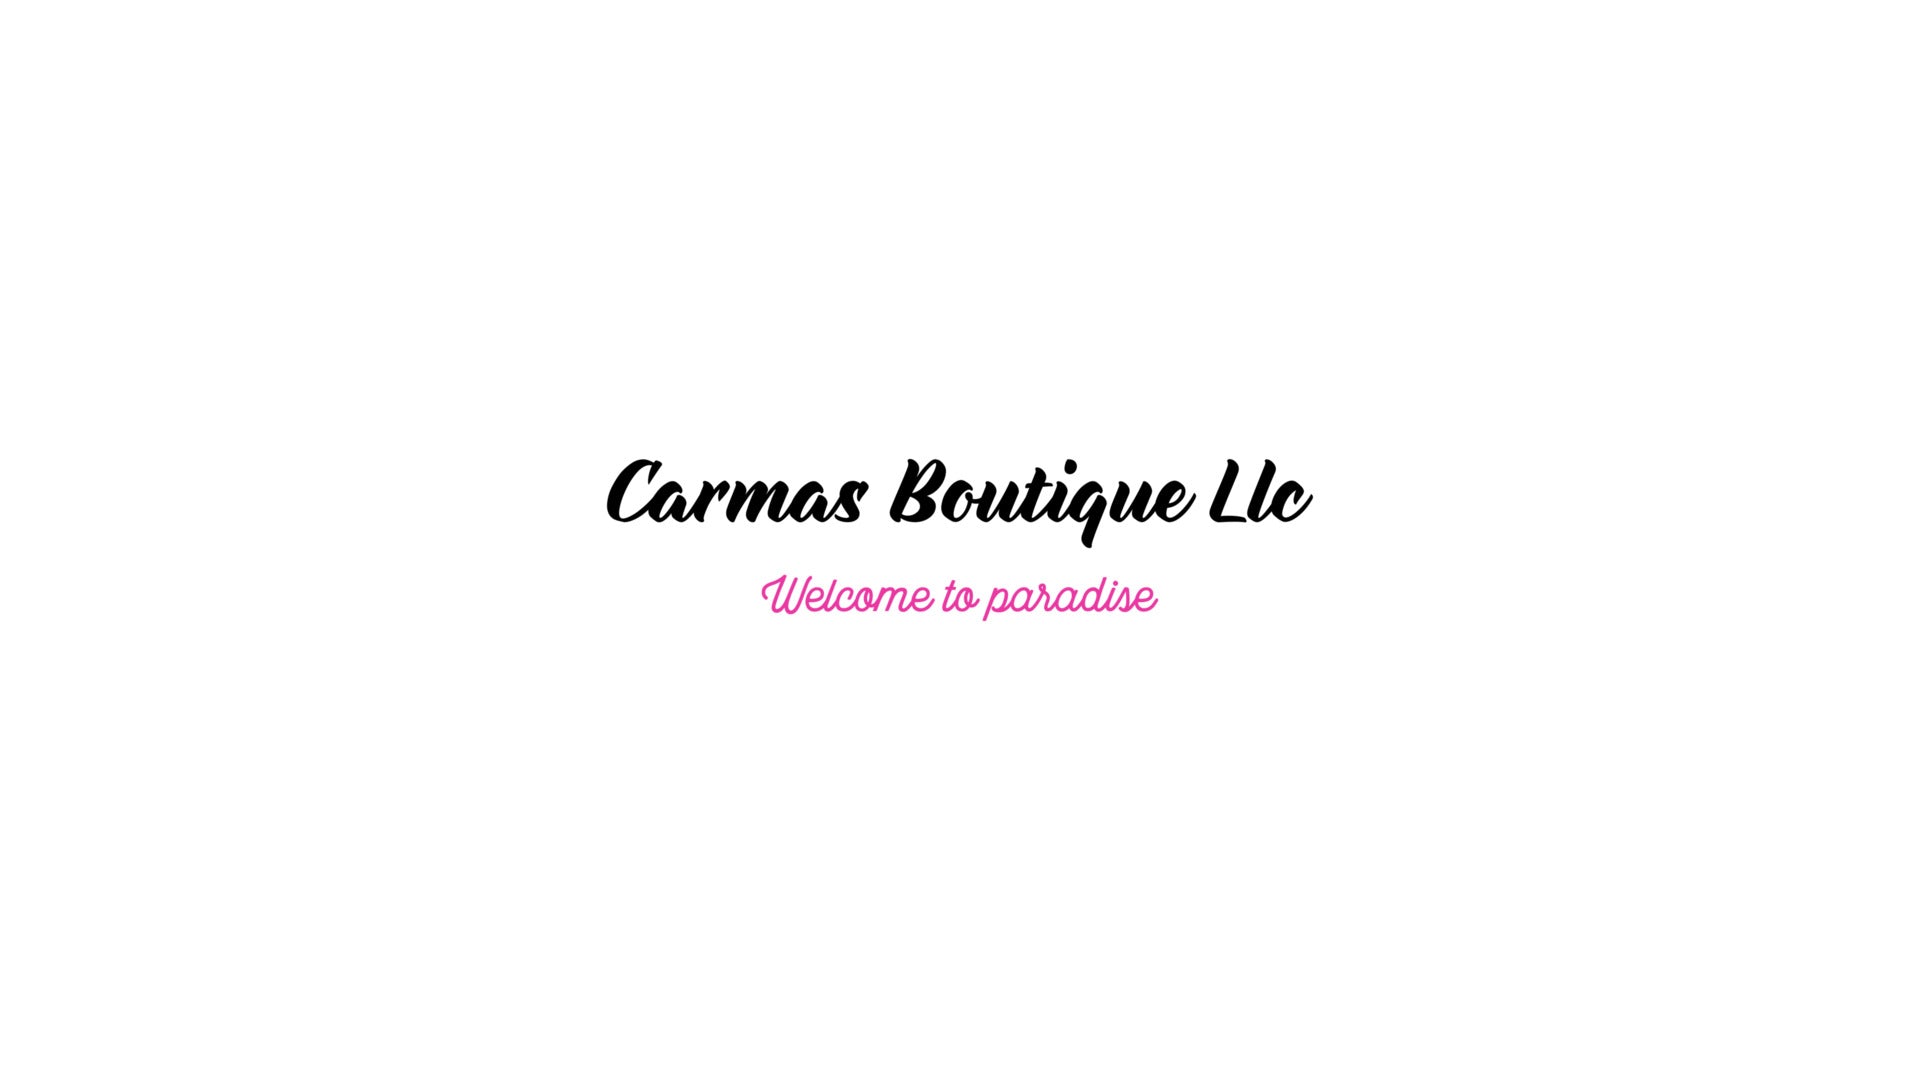 Carma's Boutique LLC